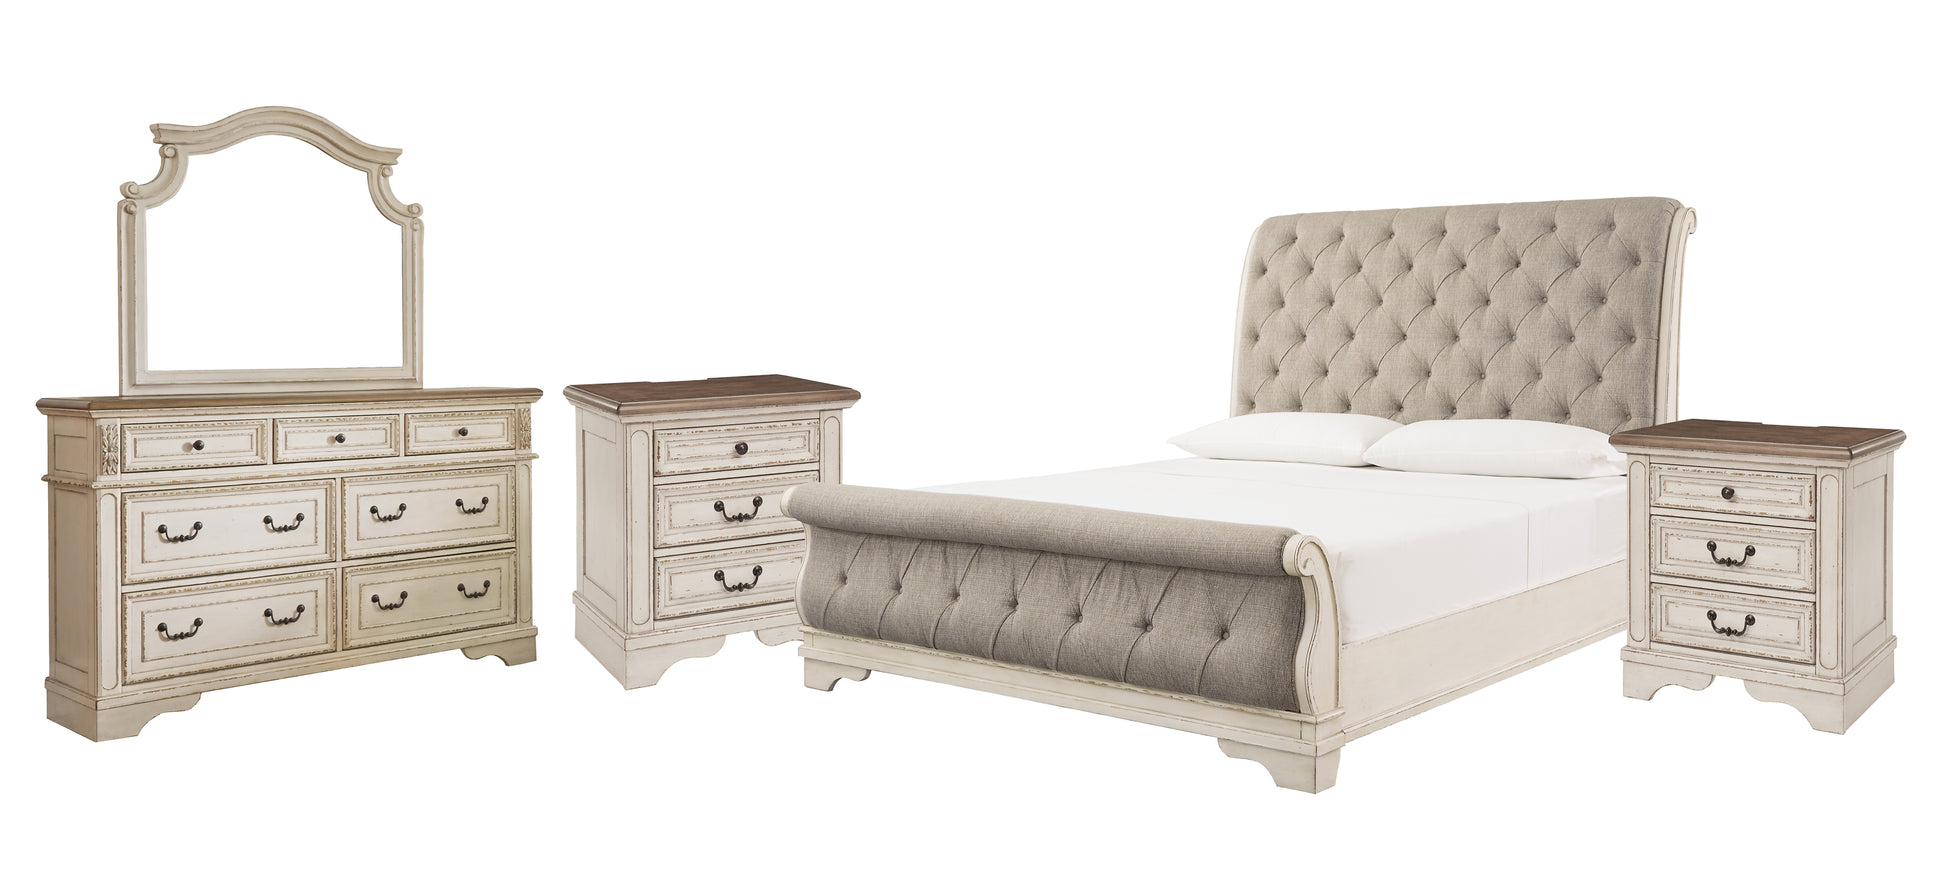 Realyn Queen Sleigh Bed with Mirrored Dresser and 2 Nightstands Wilson Furniture (OH)  in Bridgeport, Ohio. Serving Bridgeport, Yorkville, Bellaire, & Avondale